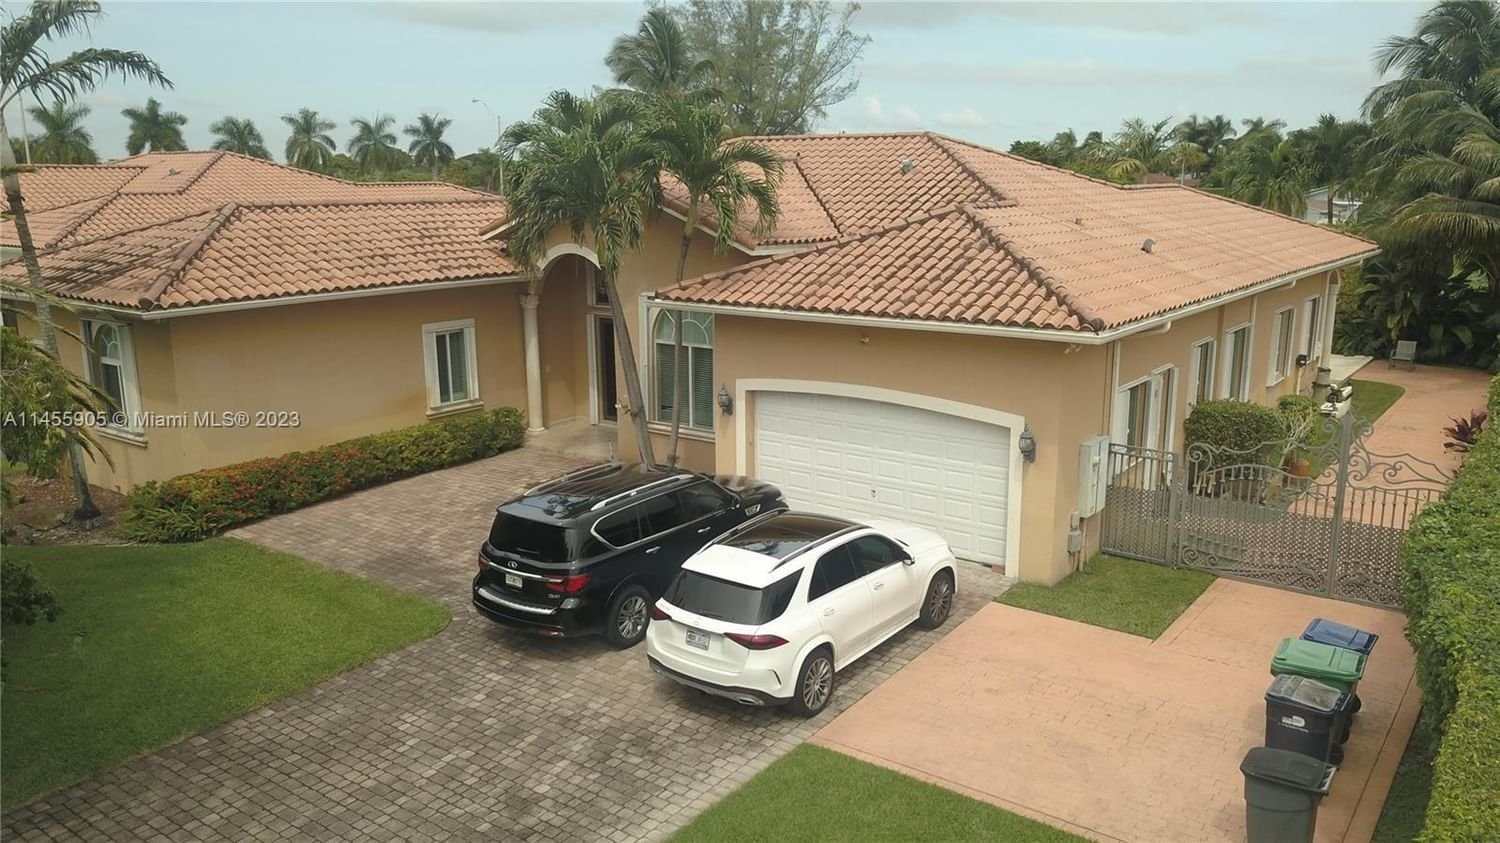 Real estate property located at 12553 76th St, Miami-Dade County, Miami, FL